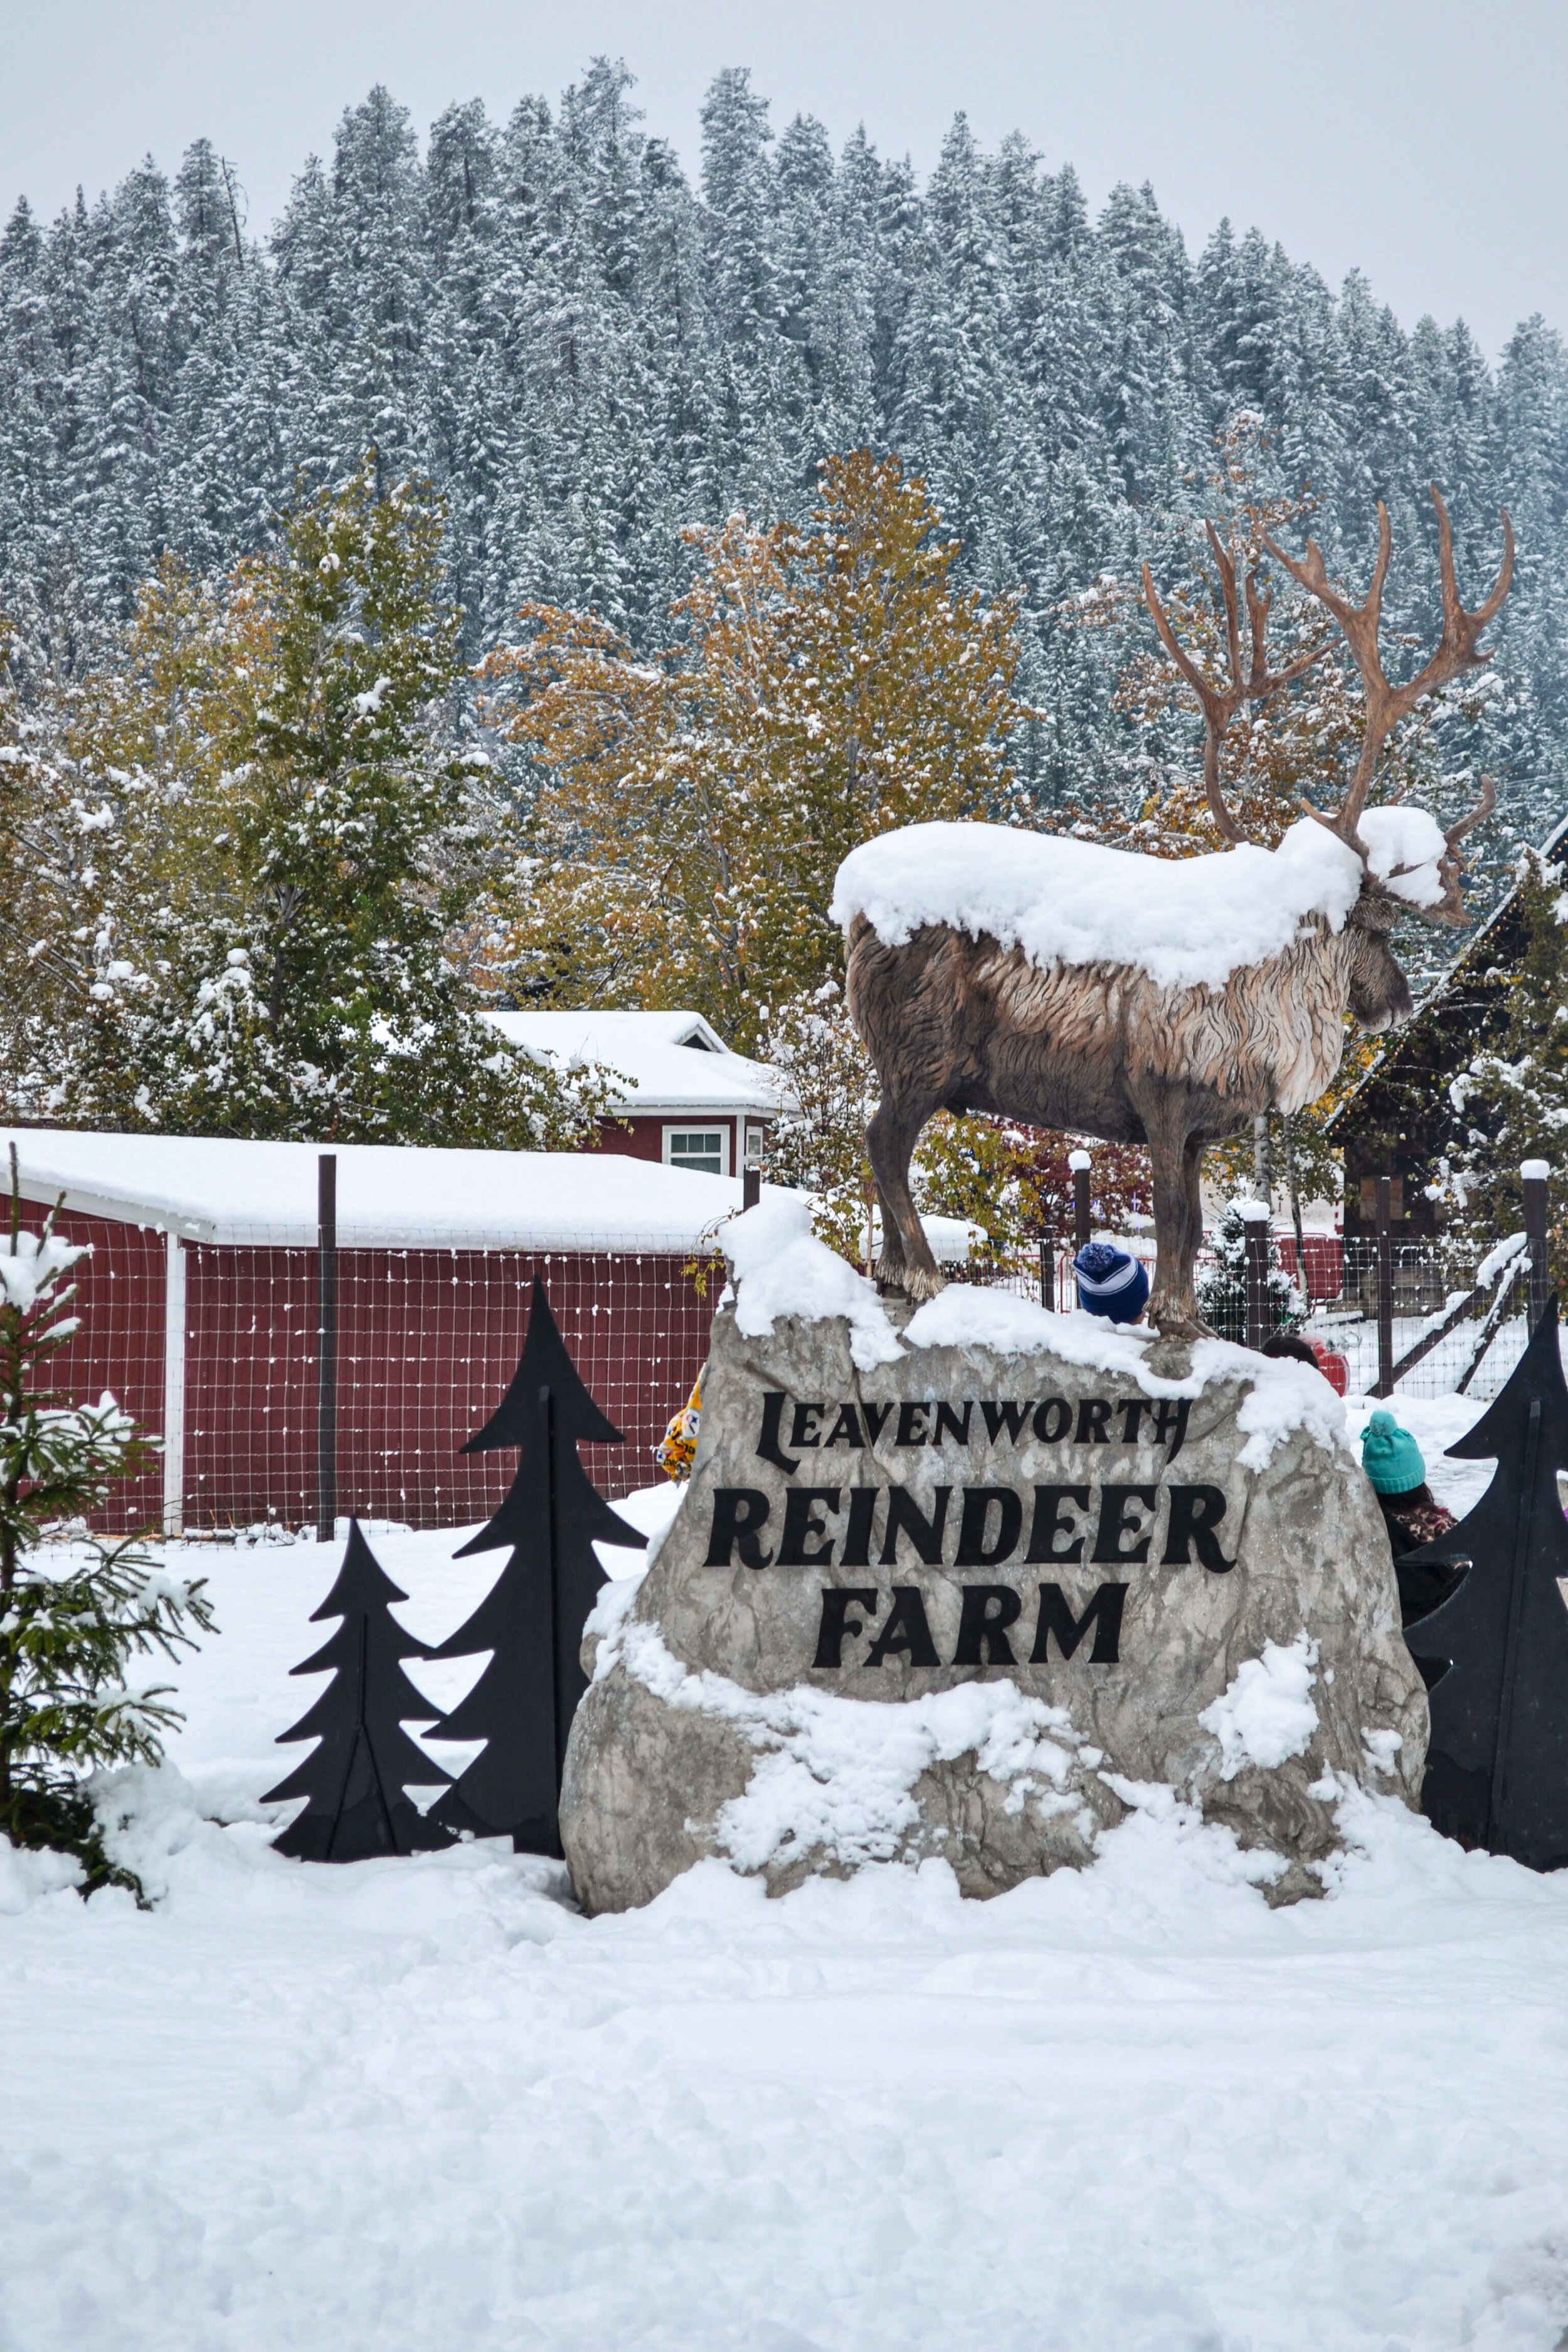 Leavenworth Reindeer Farm sign